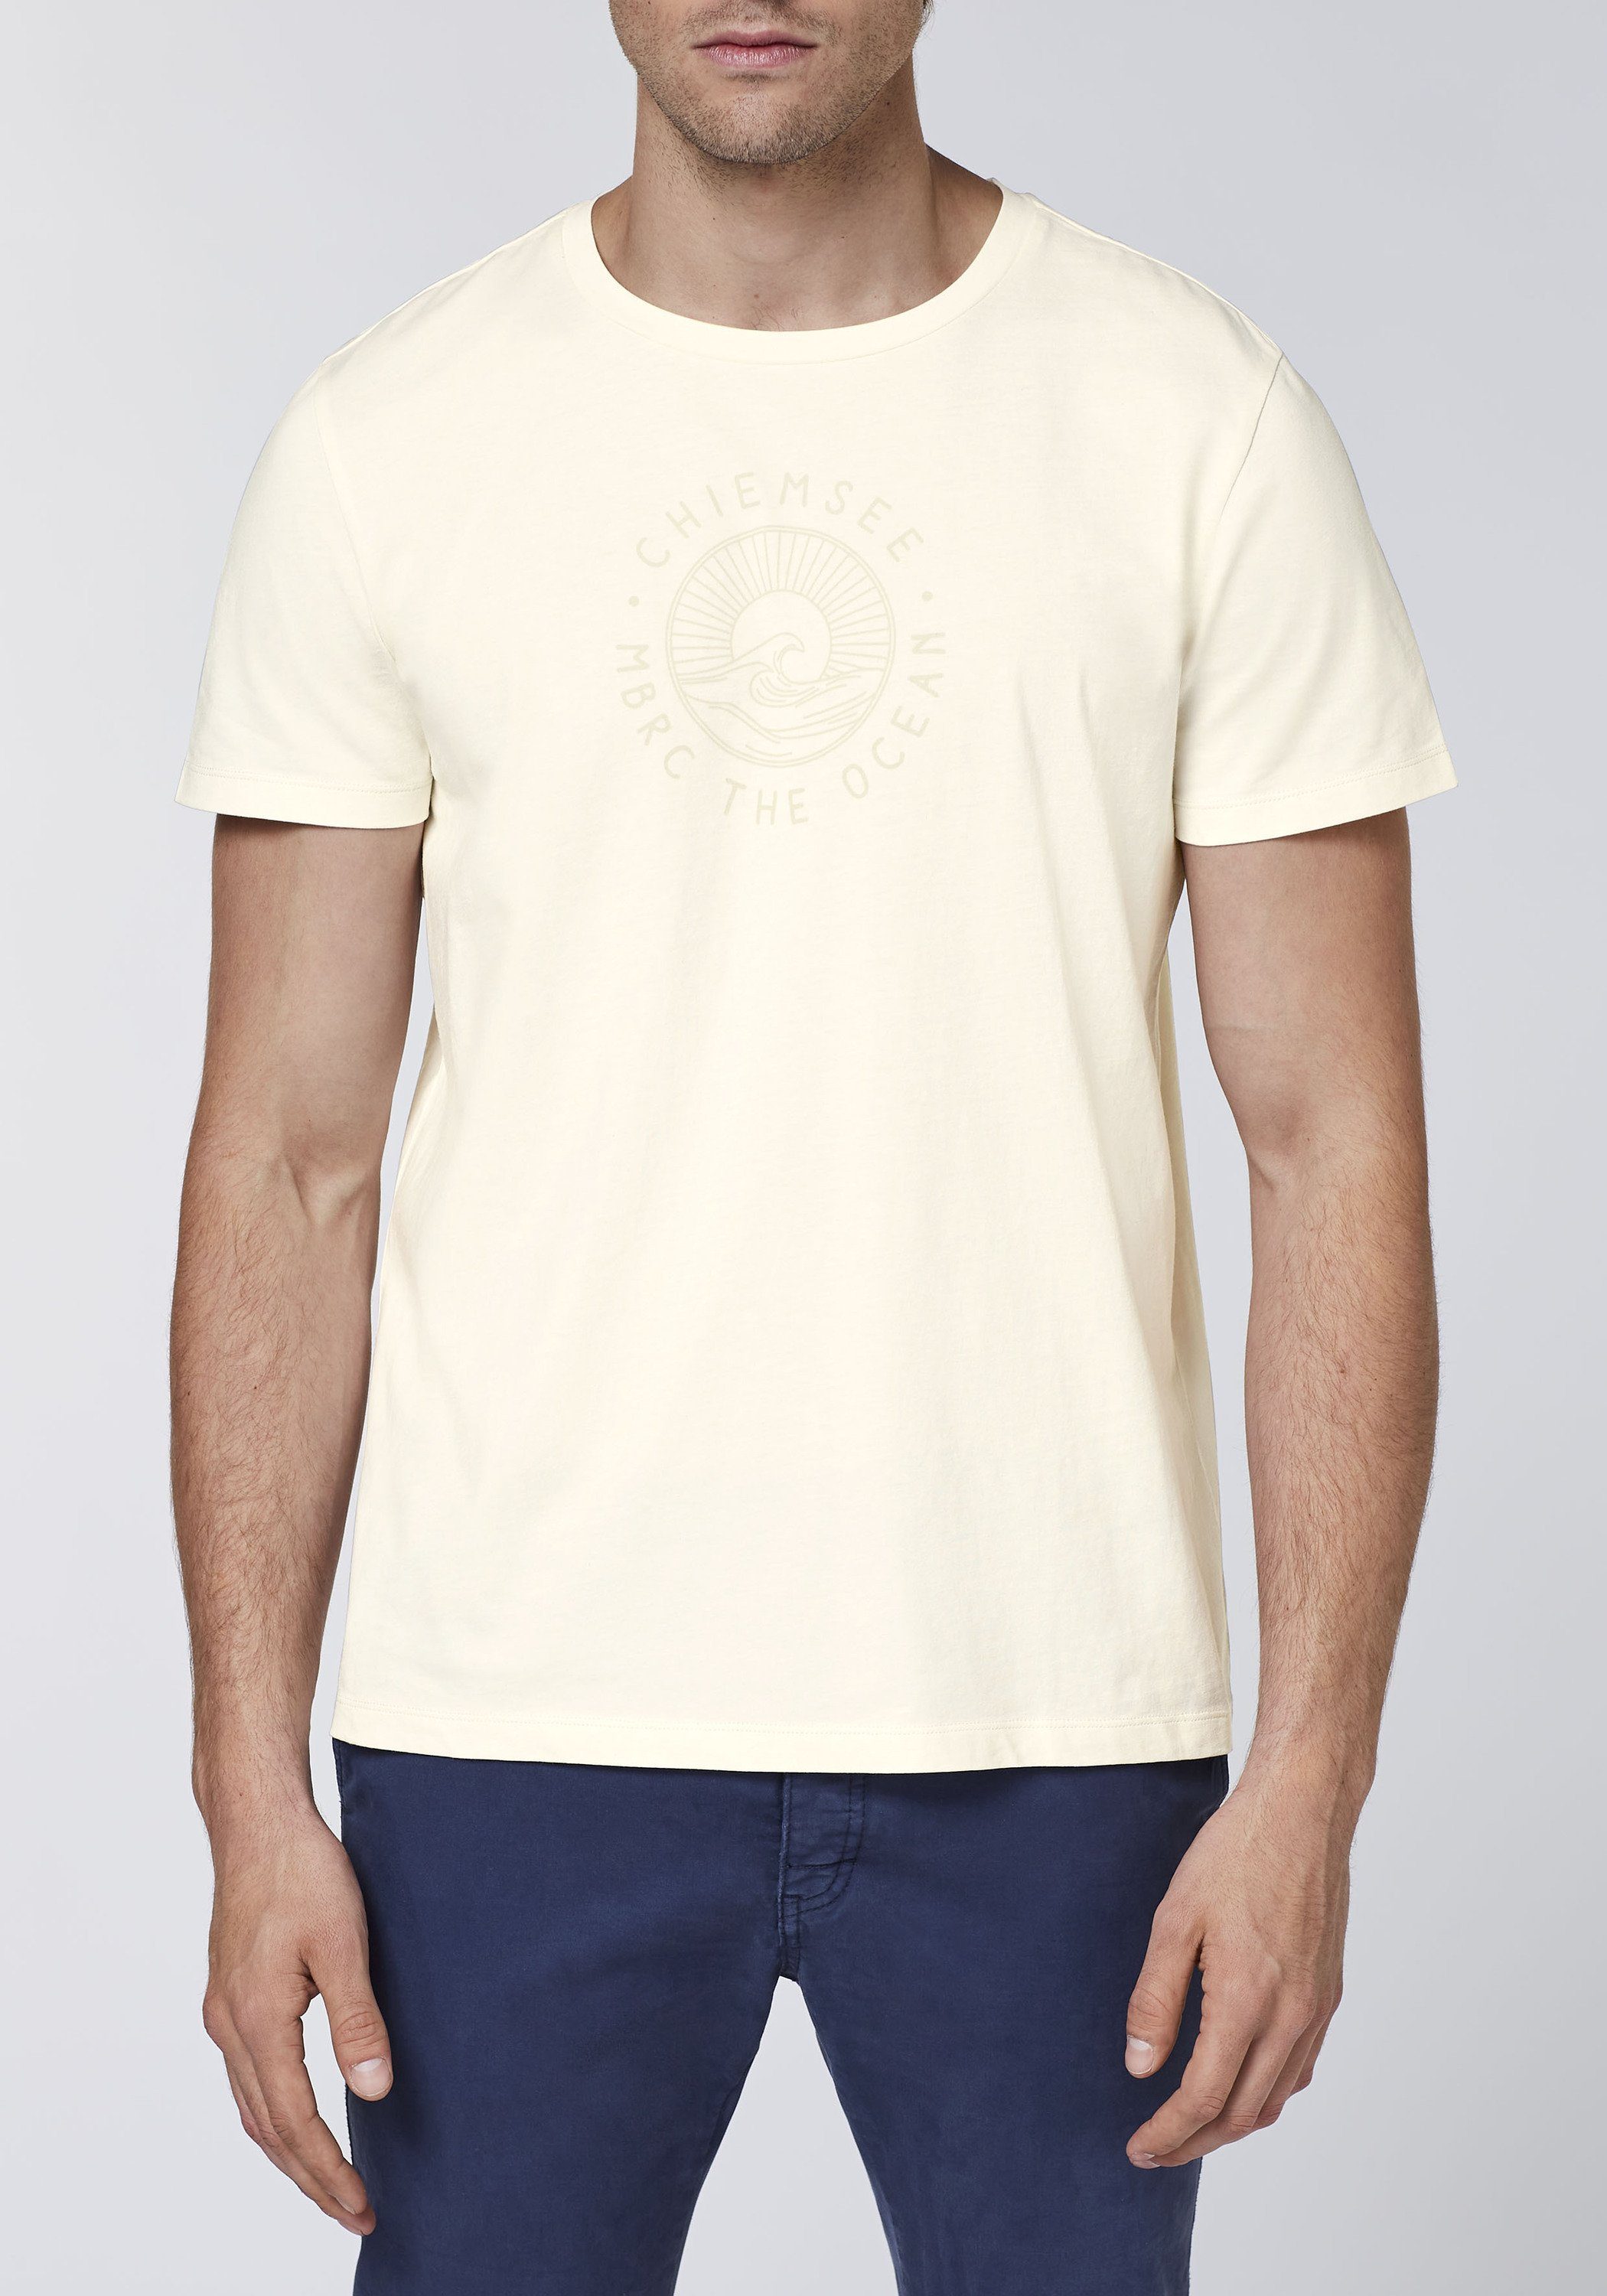 T-Shirt Natural Wellenmotiv Chiemsee 12 1 mit Print-Shirt